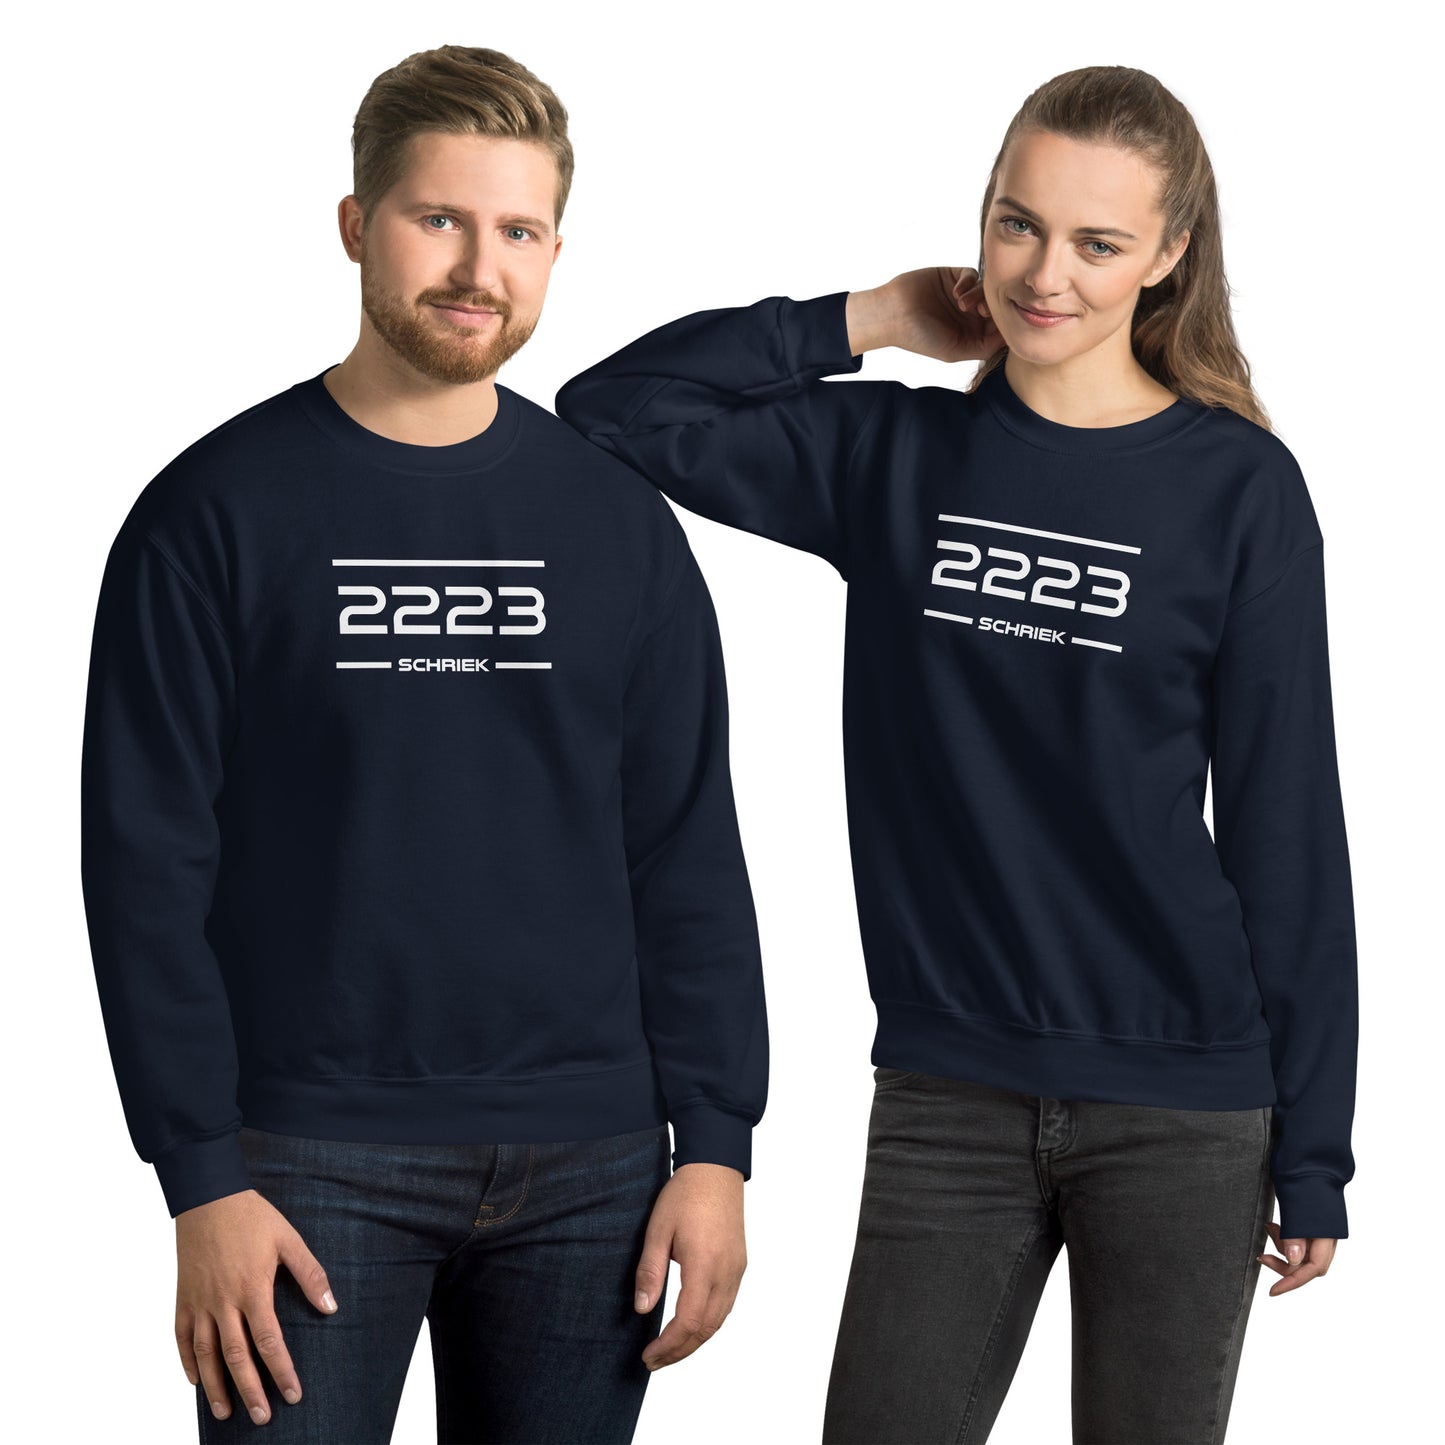 Sweater - 2223 - Schriek (M/V)